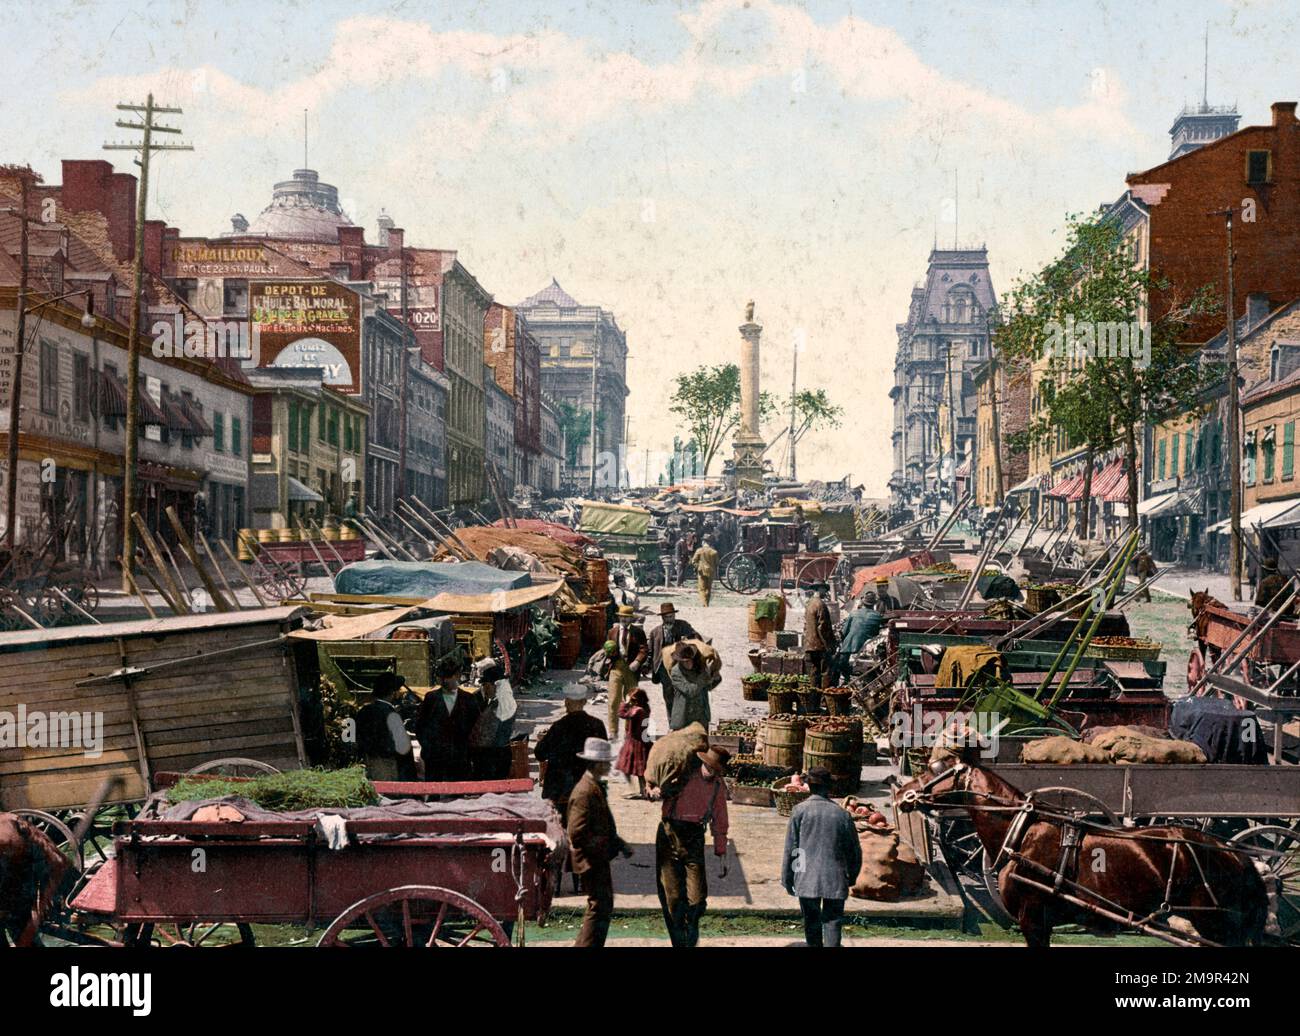 Jacques Cartier Square, Montreal, Quebec, ca. 1901 Stockfoto